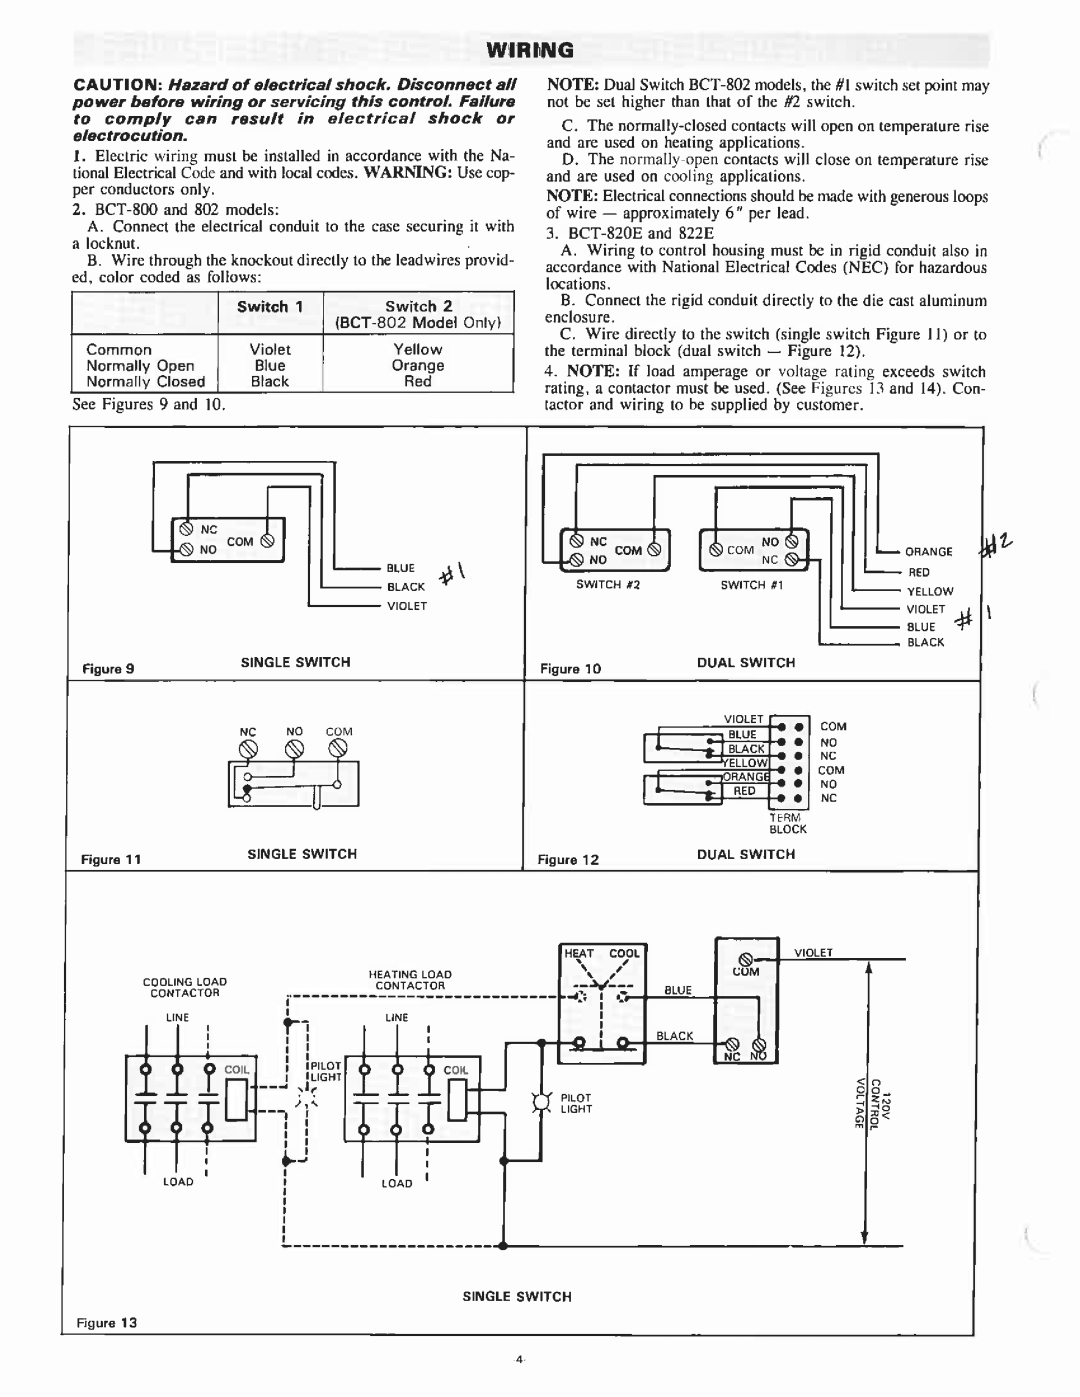 Chromalox BCT-800, BCT-820E manual 